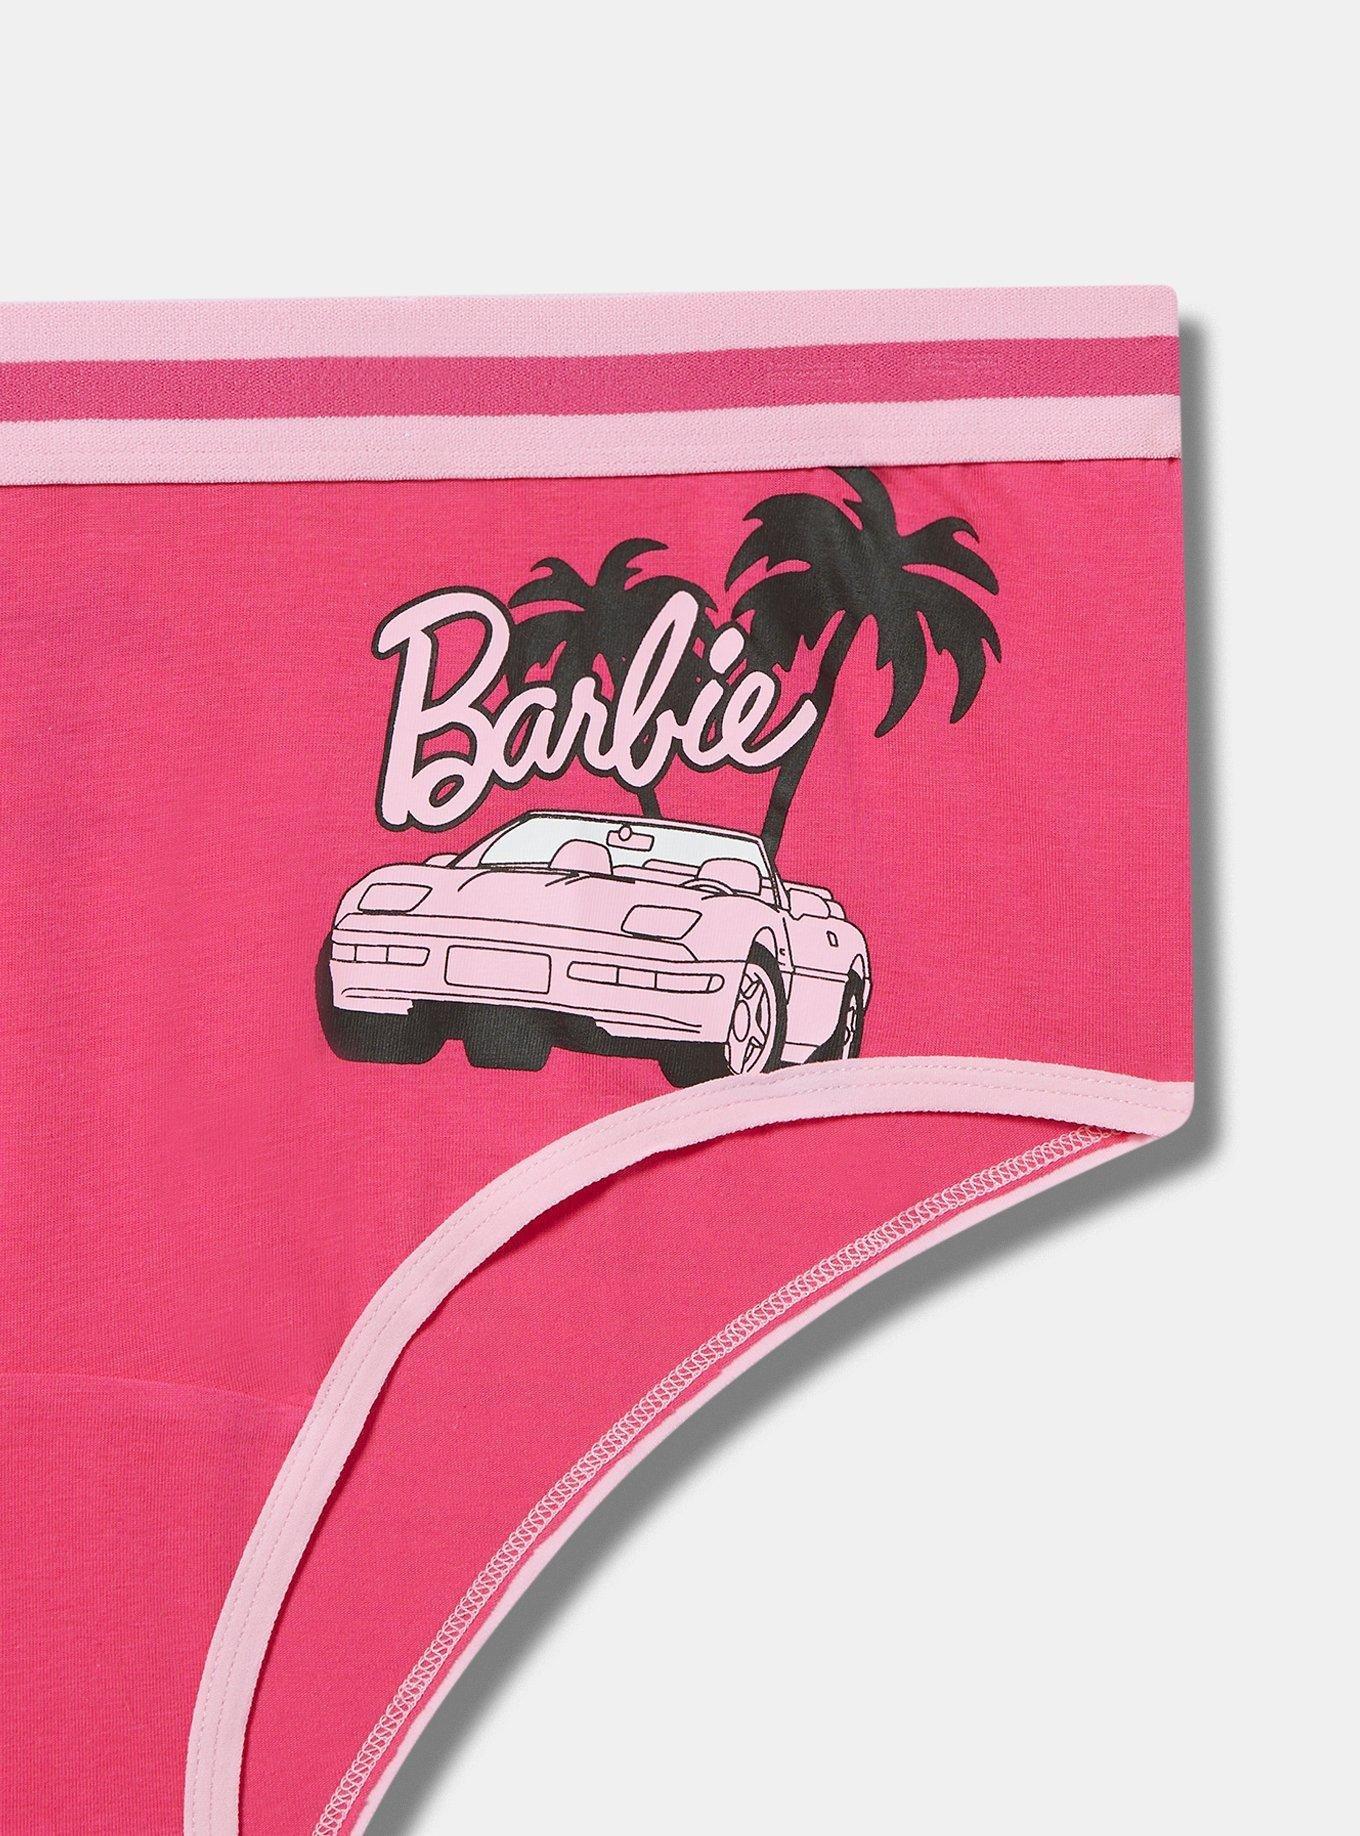 Plus Size - Barbie Cotton Mid Rise Cheeky Logo Panty - Torrid